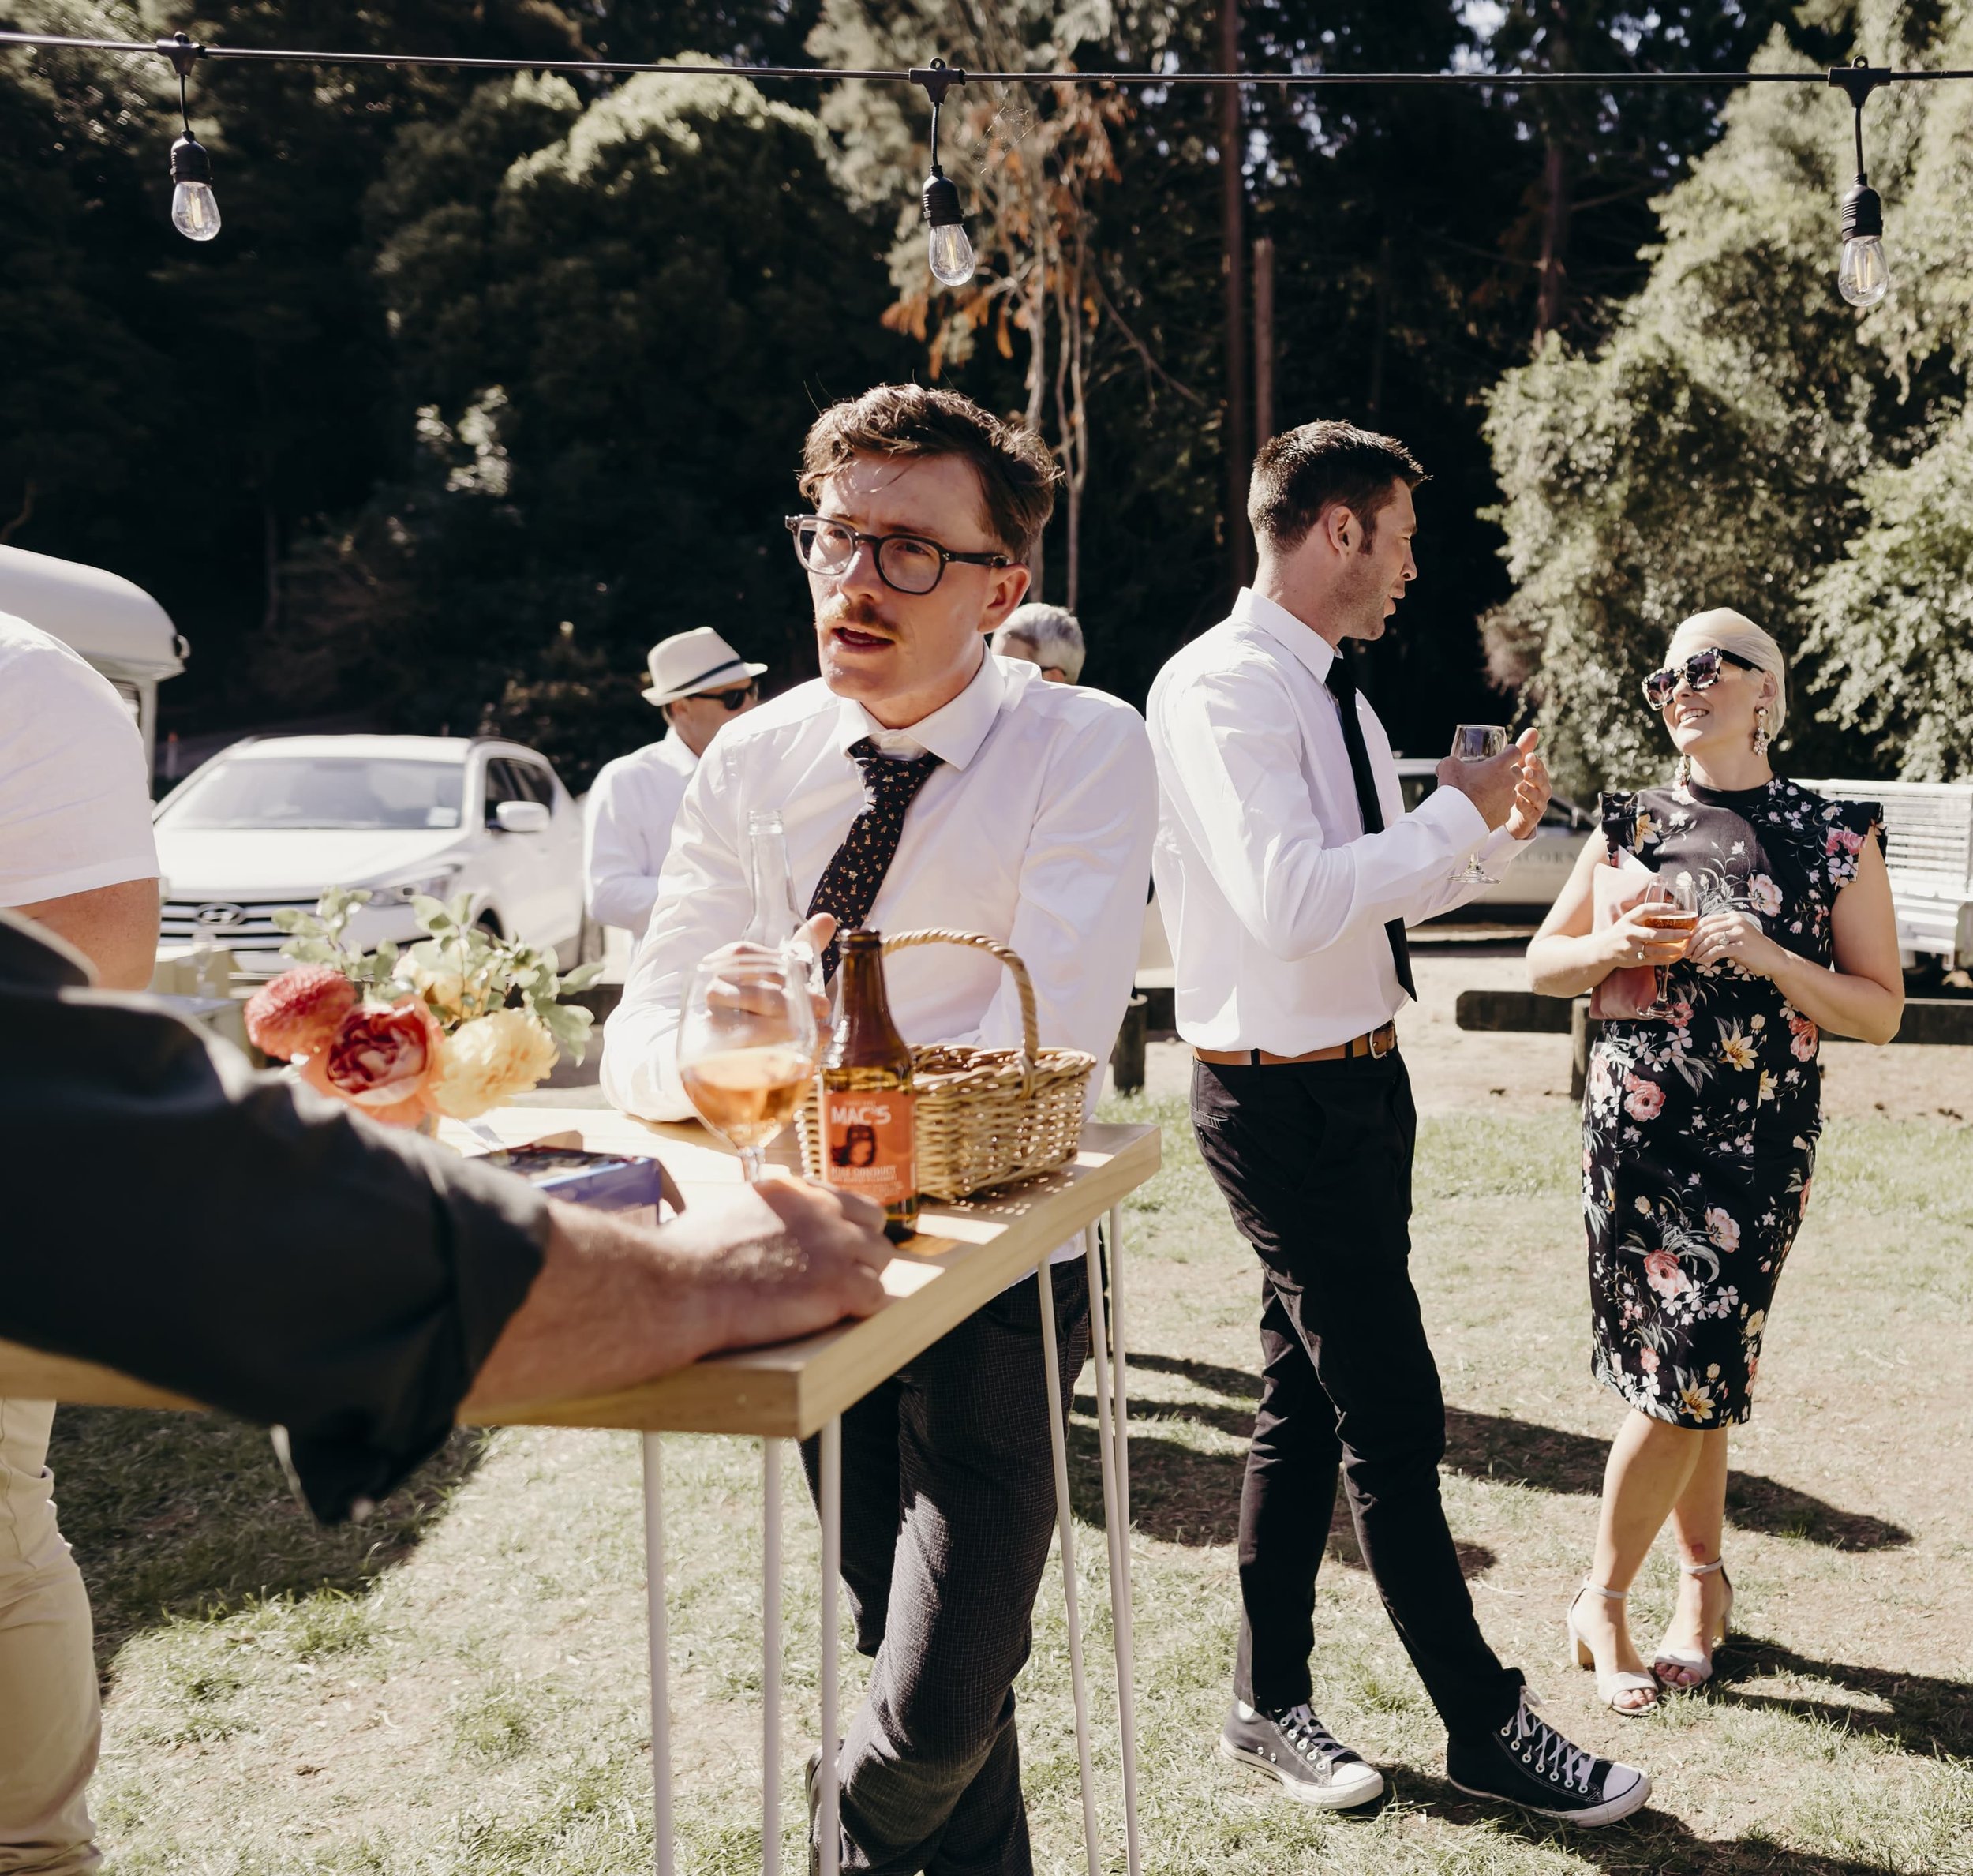 Event hire equipment Dunedin - large wooden bar leaner at wedding.jpg